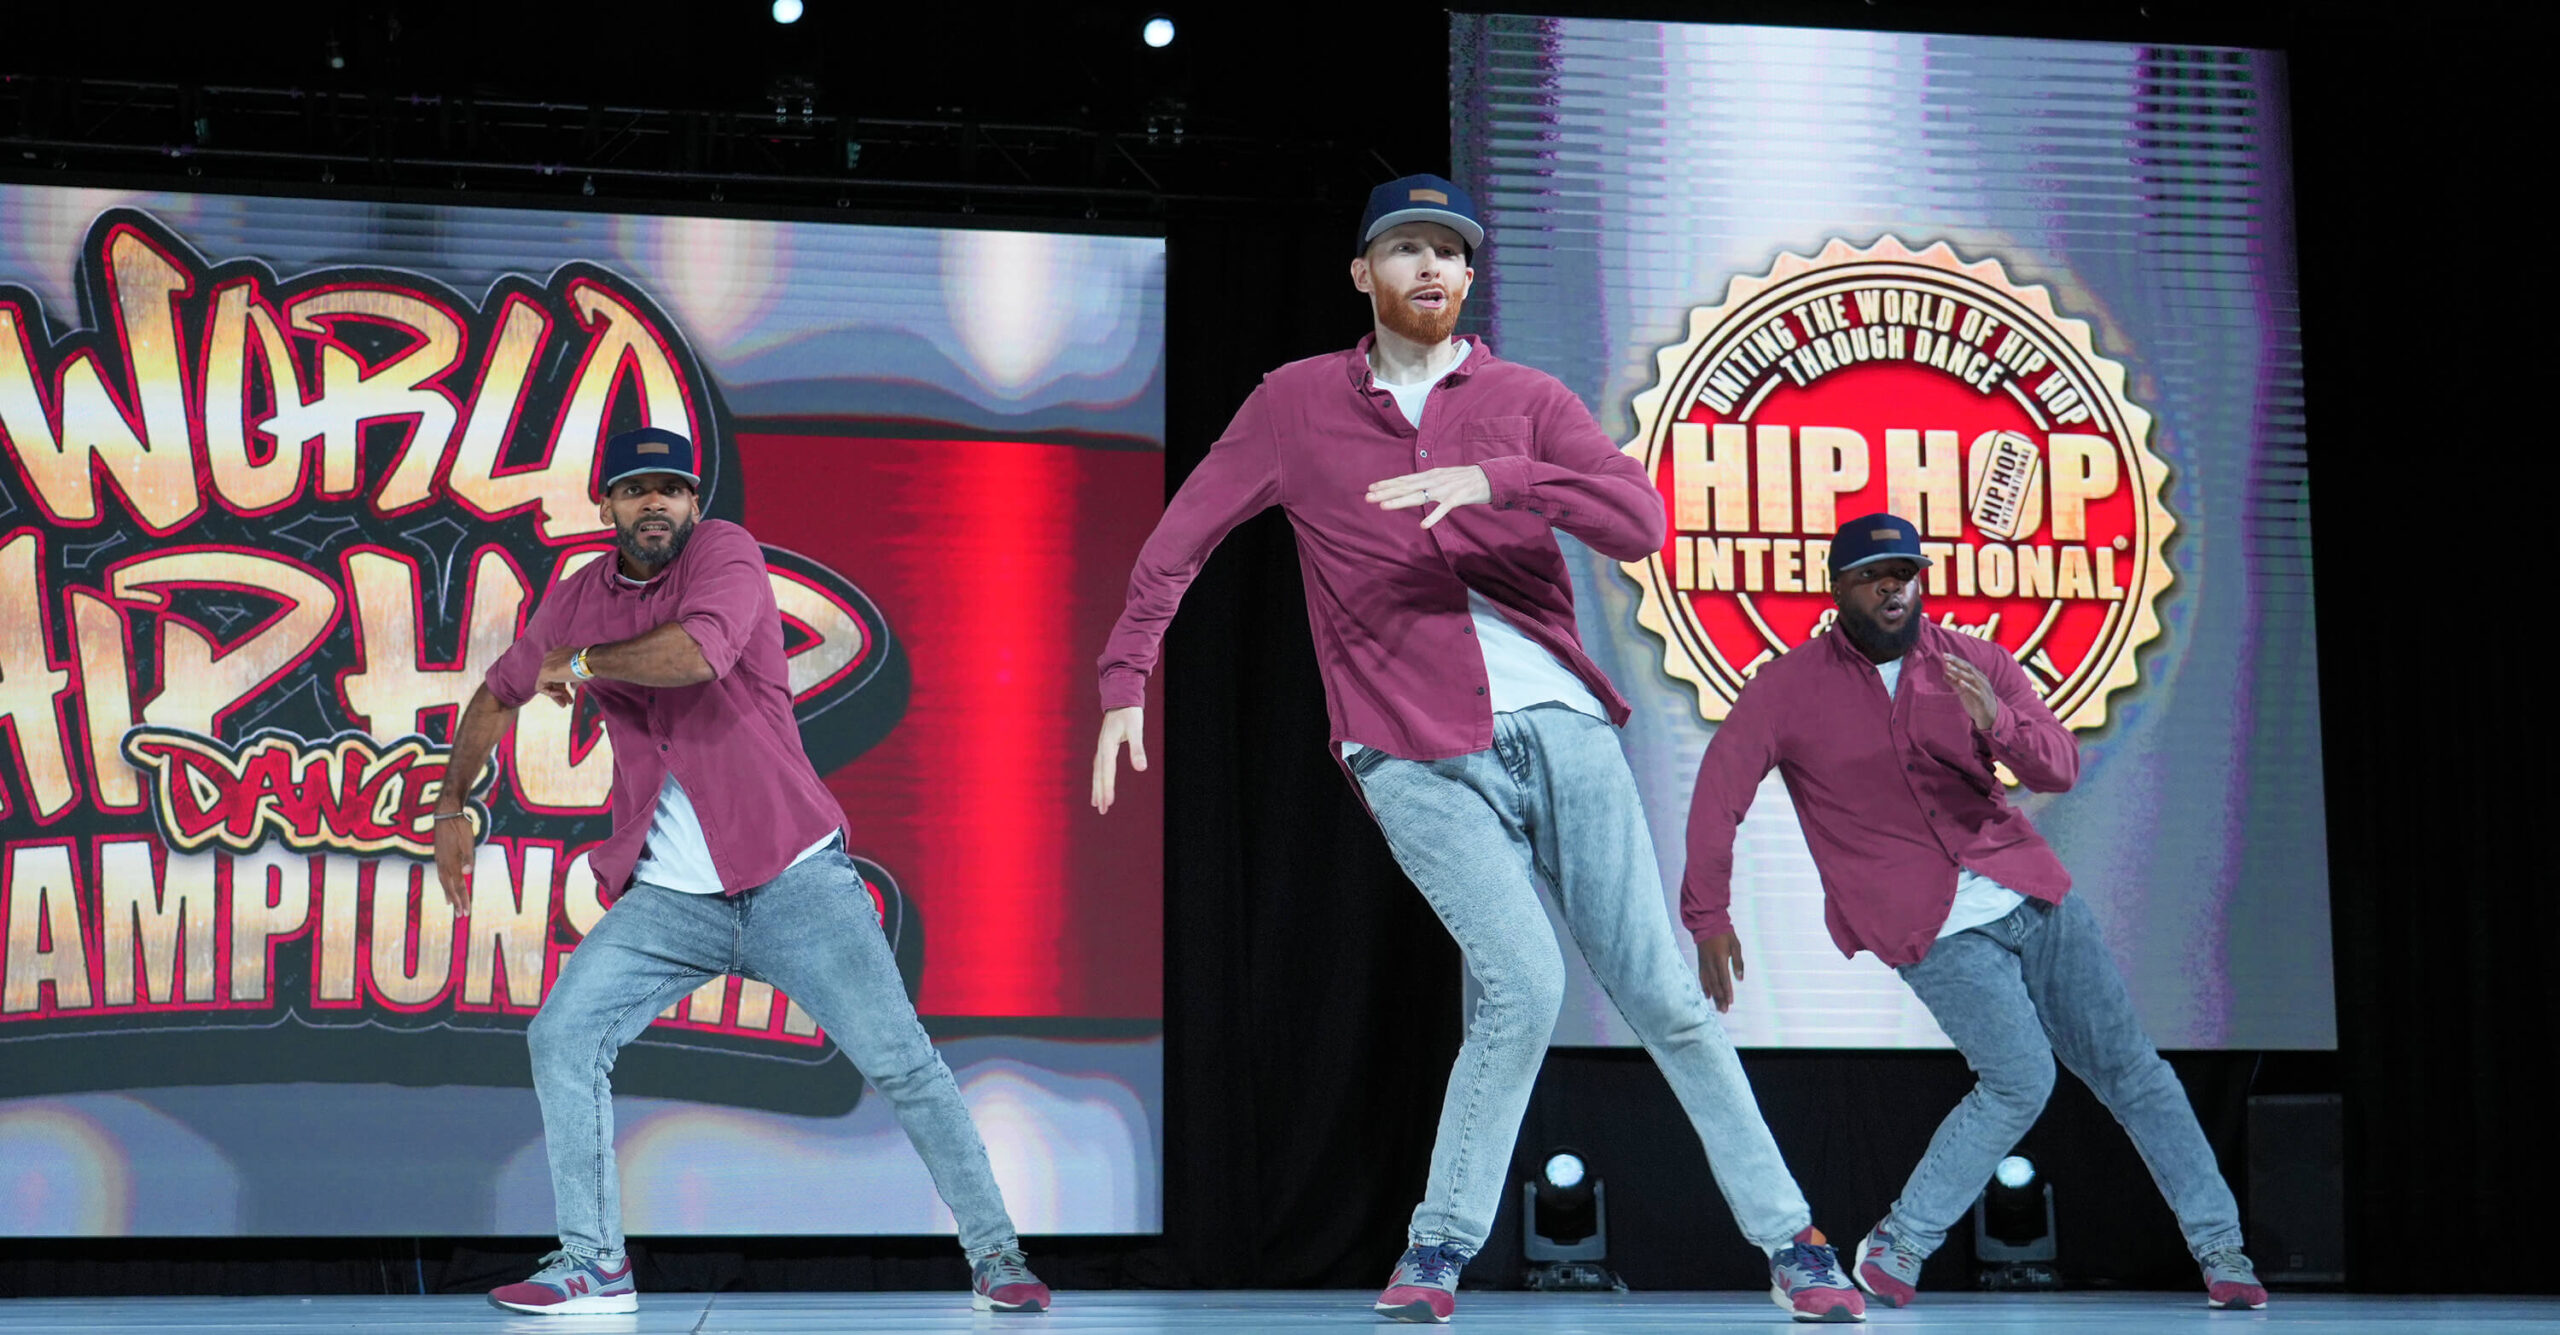 world hip hop dance championship